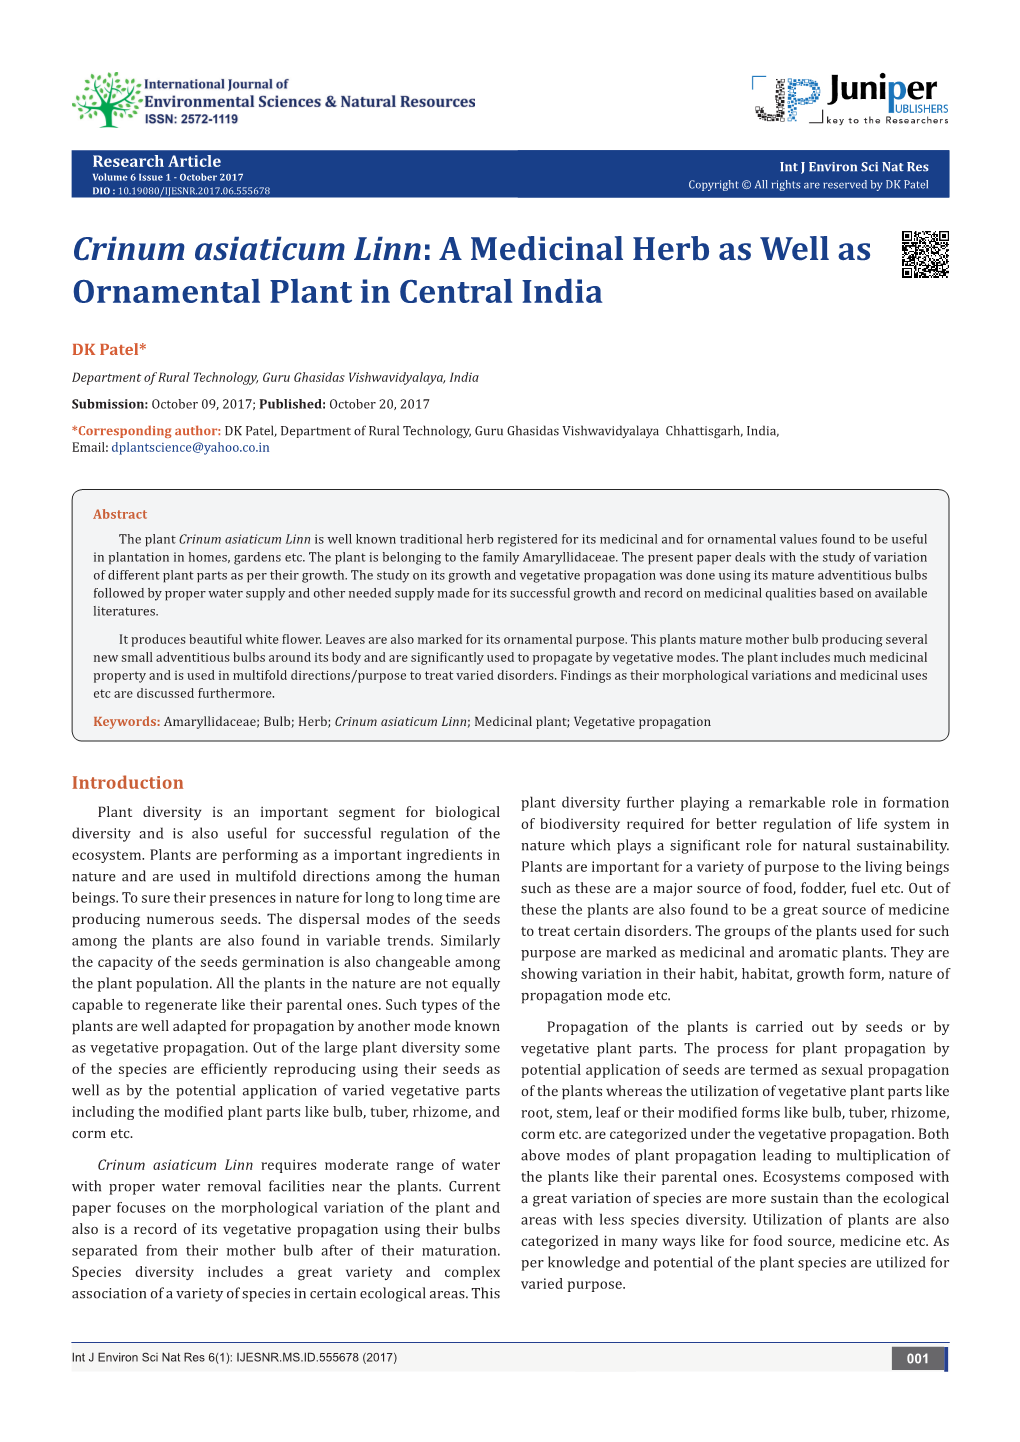 Crinum Asiaticum Linn: a Medicinal Herb As Well As Ornamental Plant in Central India